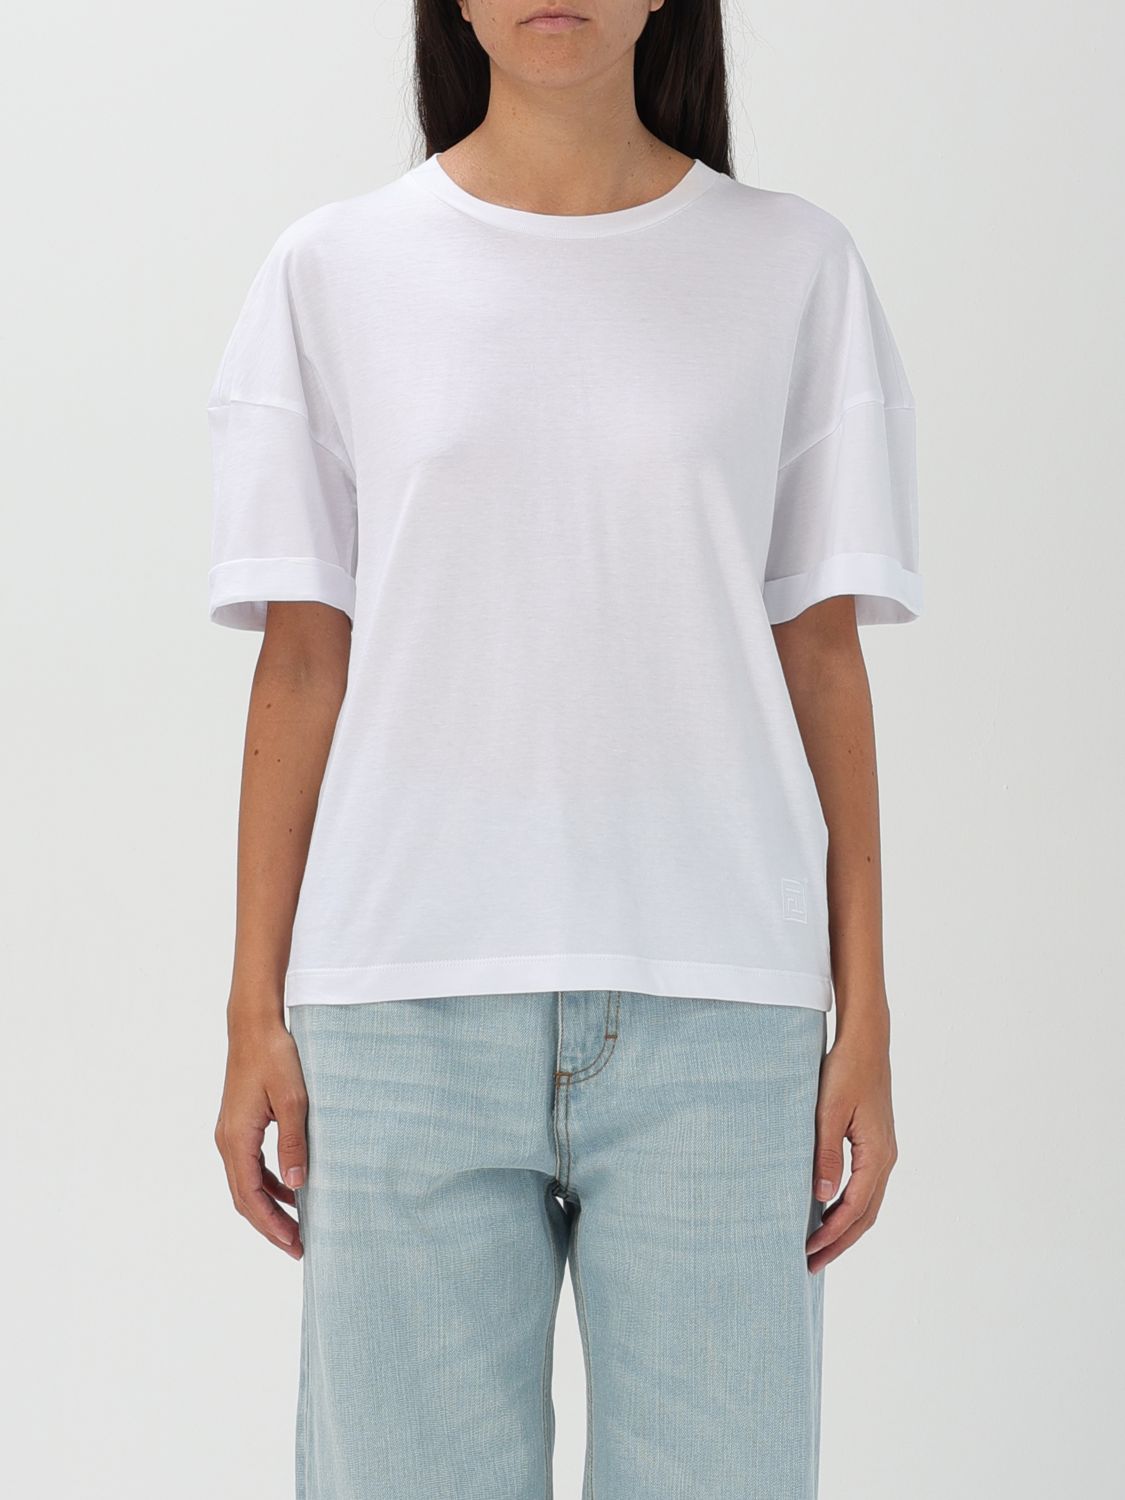 Federica Tosi T-Shirt FEDERICA TOSI Woman color White